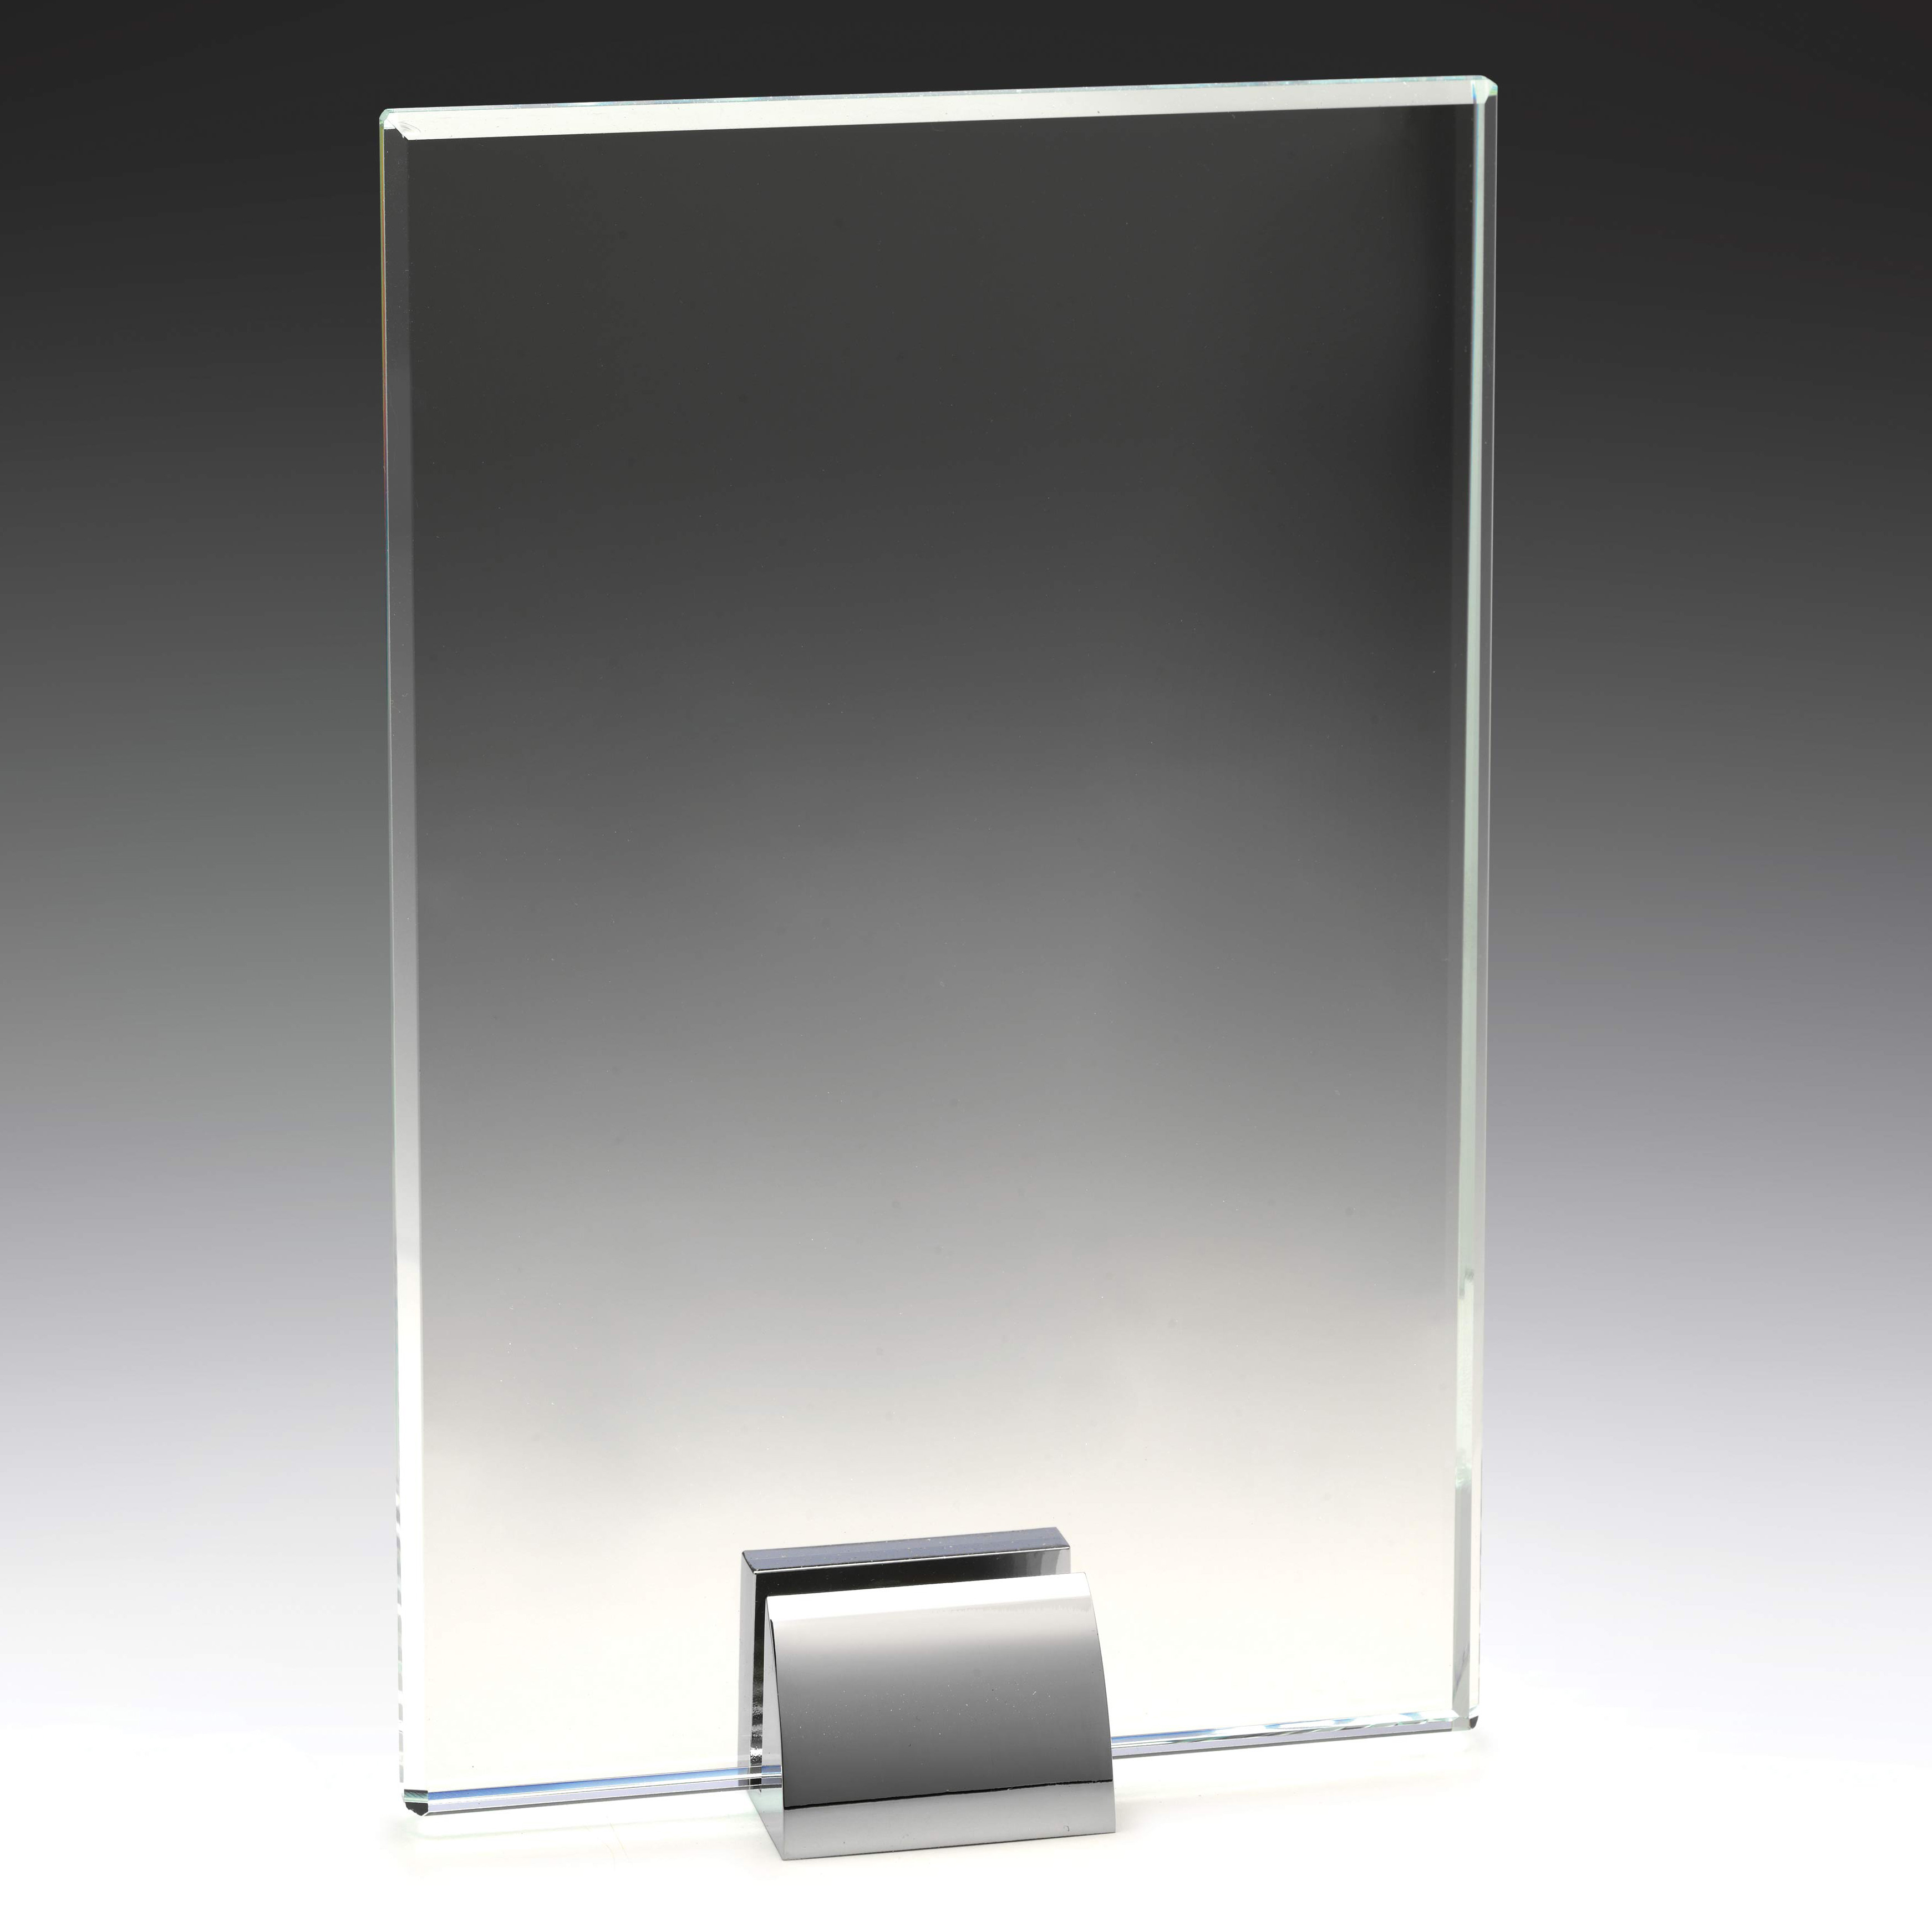 Glass & Metal Value Award